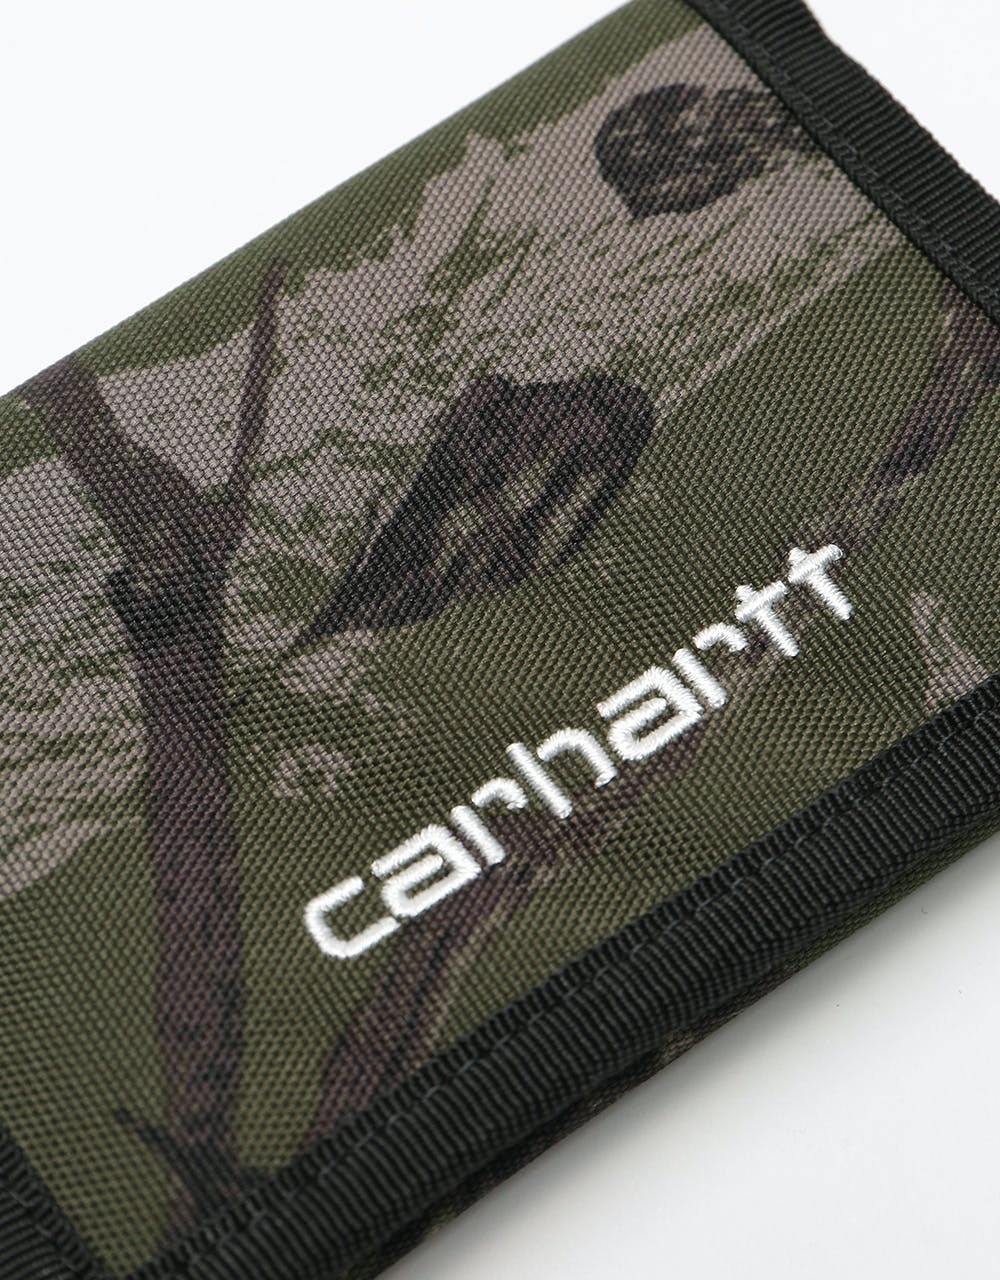 Carhartt WIP Payton Wallet - Camo Tree/Green/White